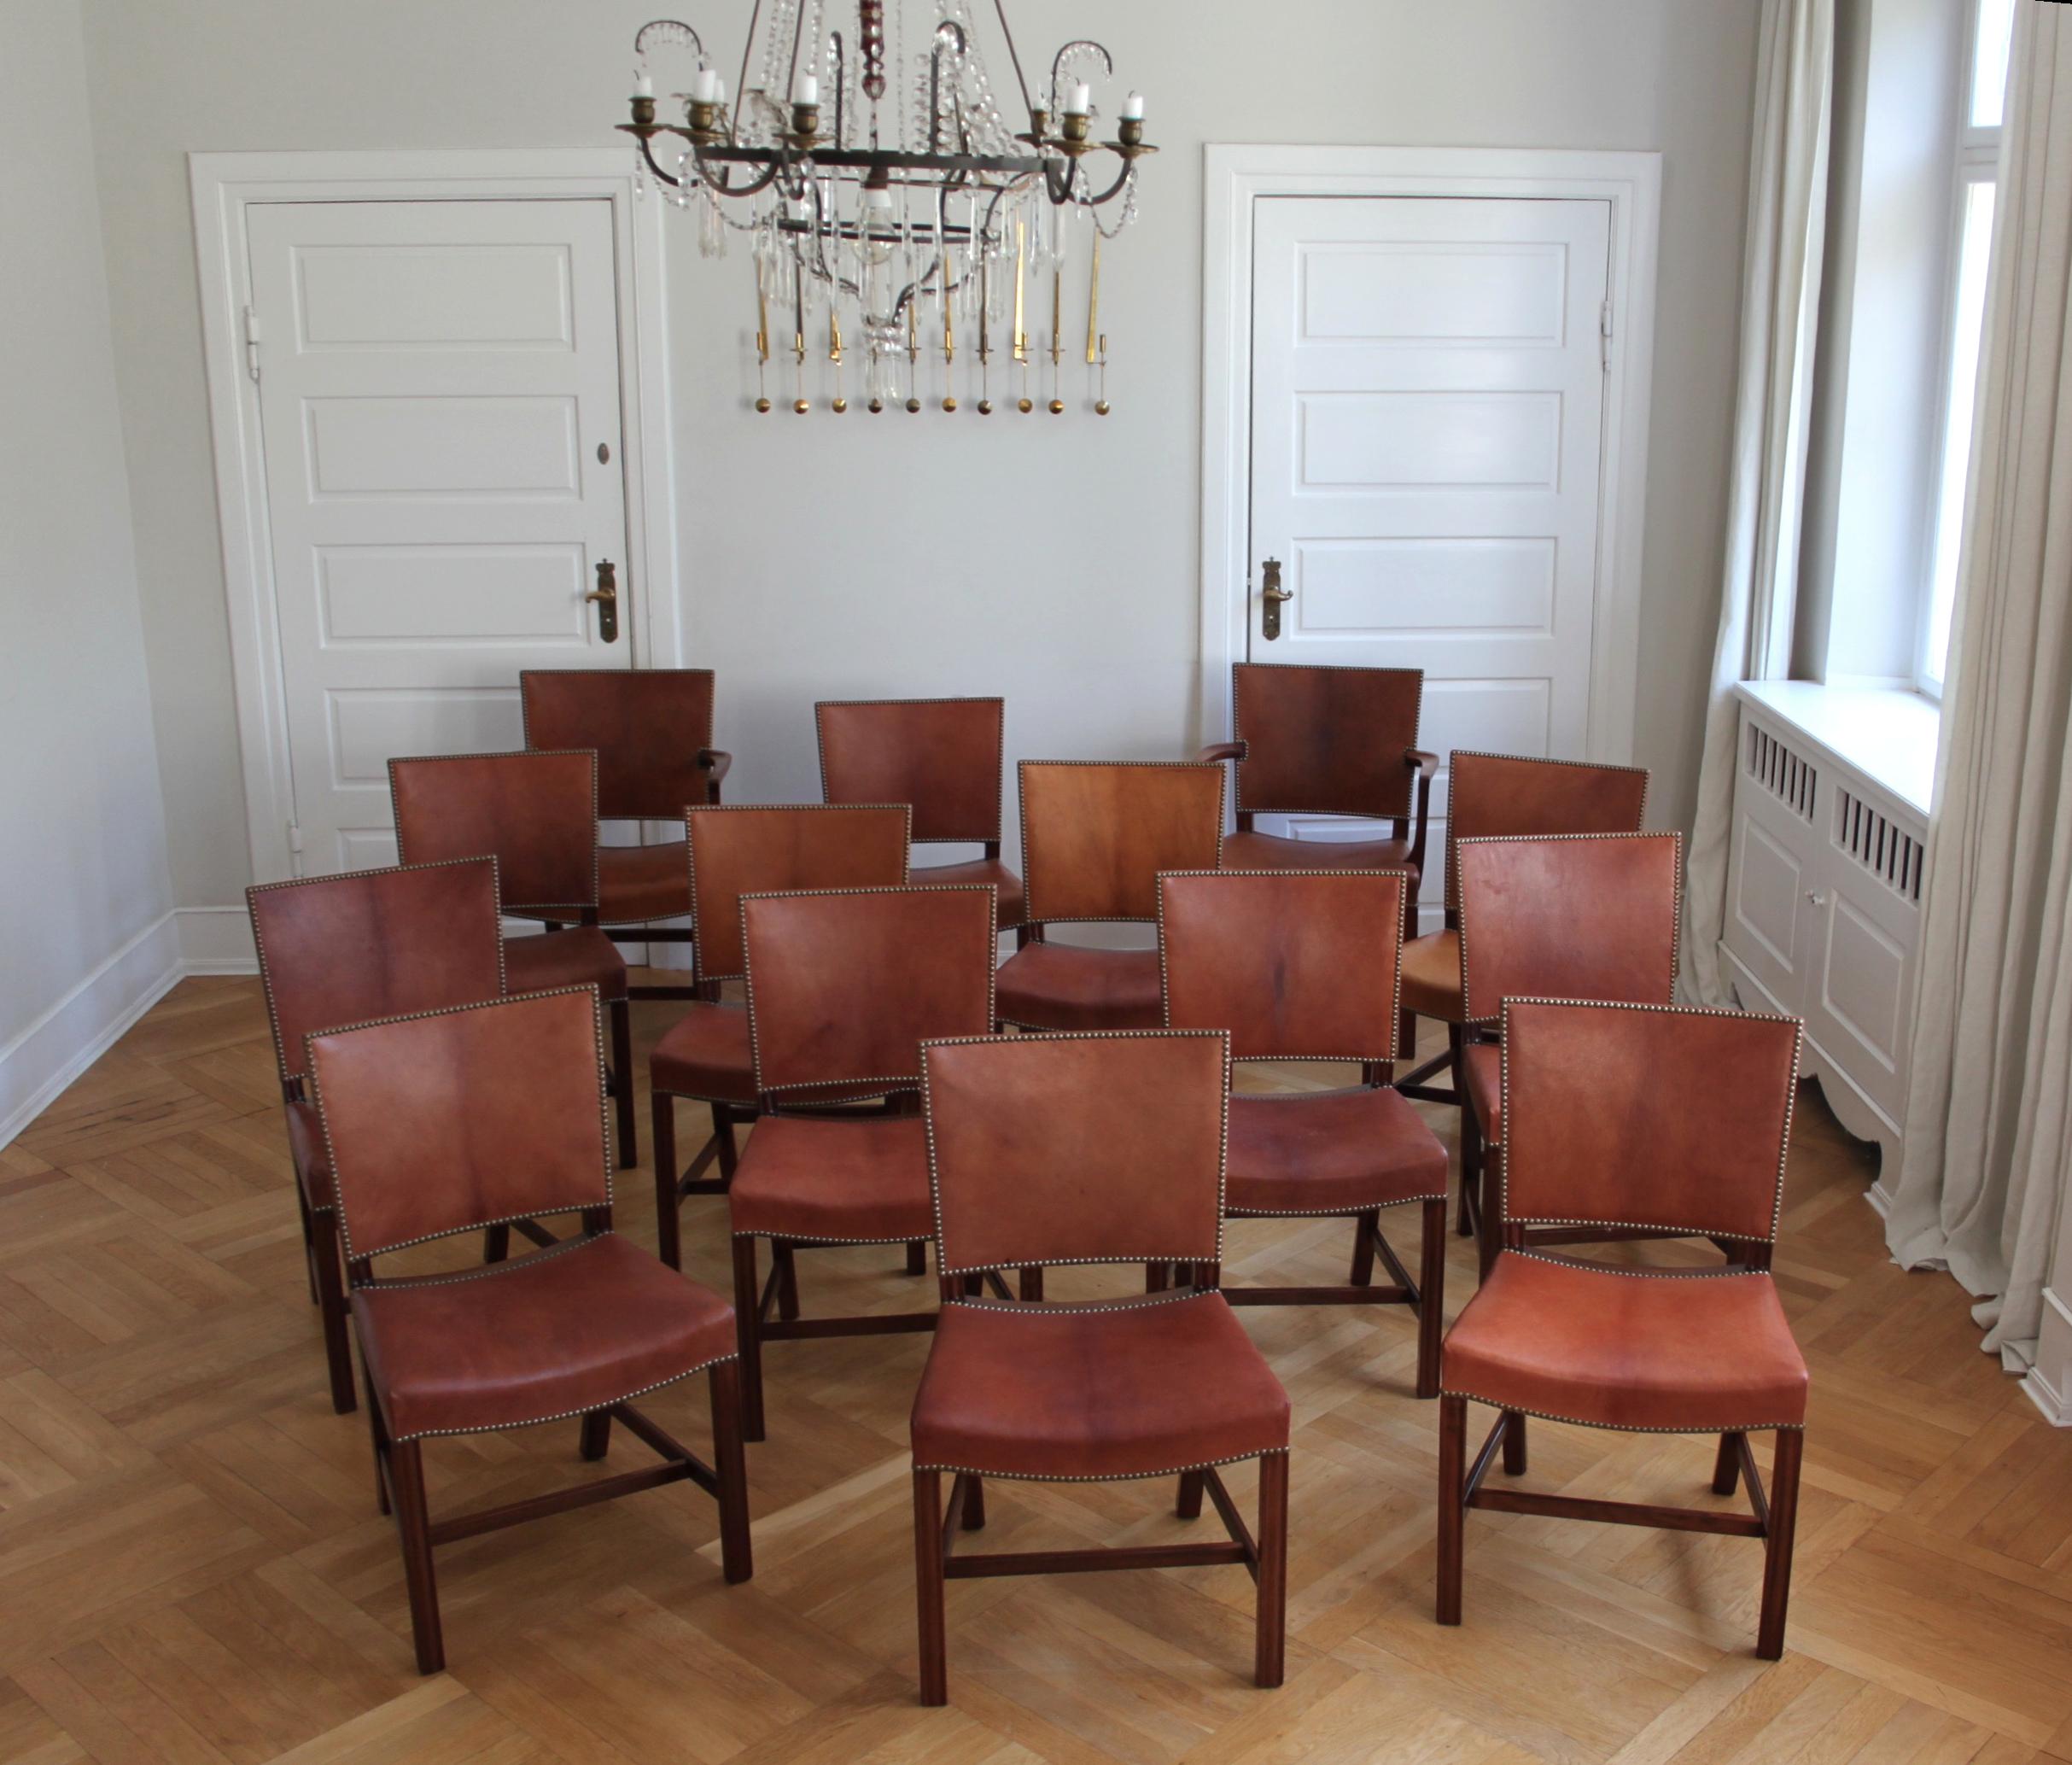 Kaare Klint & Rud Rasmussen Snedkerier - Scandinavian Modern Design.

An extraordinary set of eight Kaare Klint red chairs, executed by cabinetmaker Rud. Rasmussen, Denmark. (8 chairs out of this set of 14 chairs)

Profiled legs of mahogany, seat